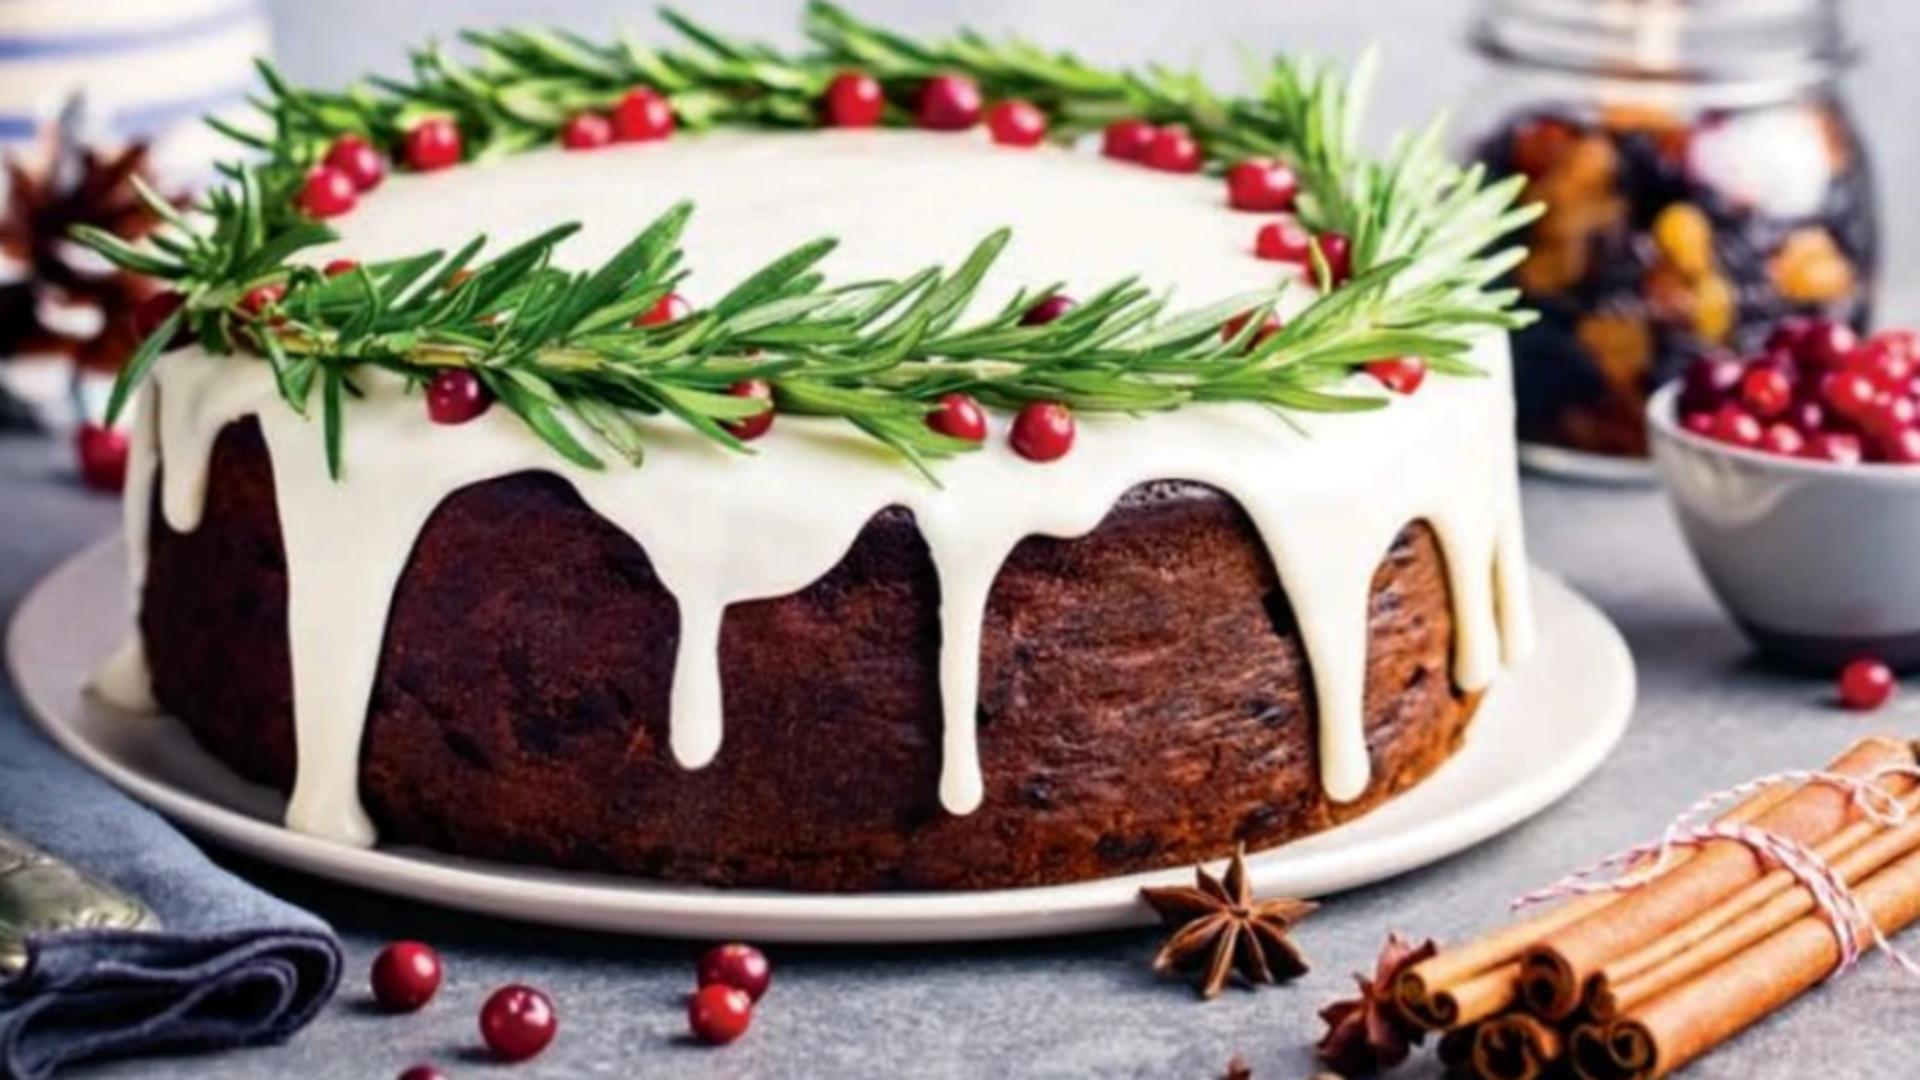 Tortul cu fructe confiate, vedeta mesei de Revelion – Rețeta cu care îi vei cuceri pe invitați